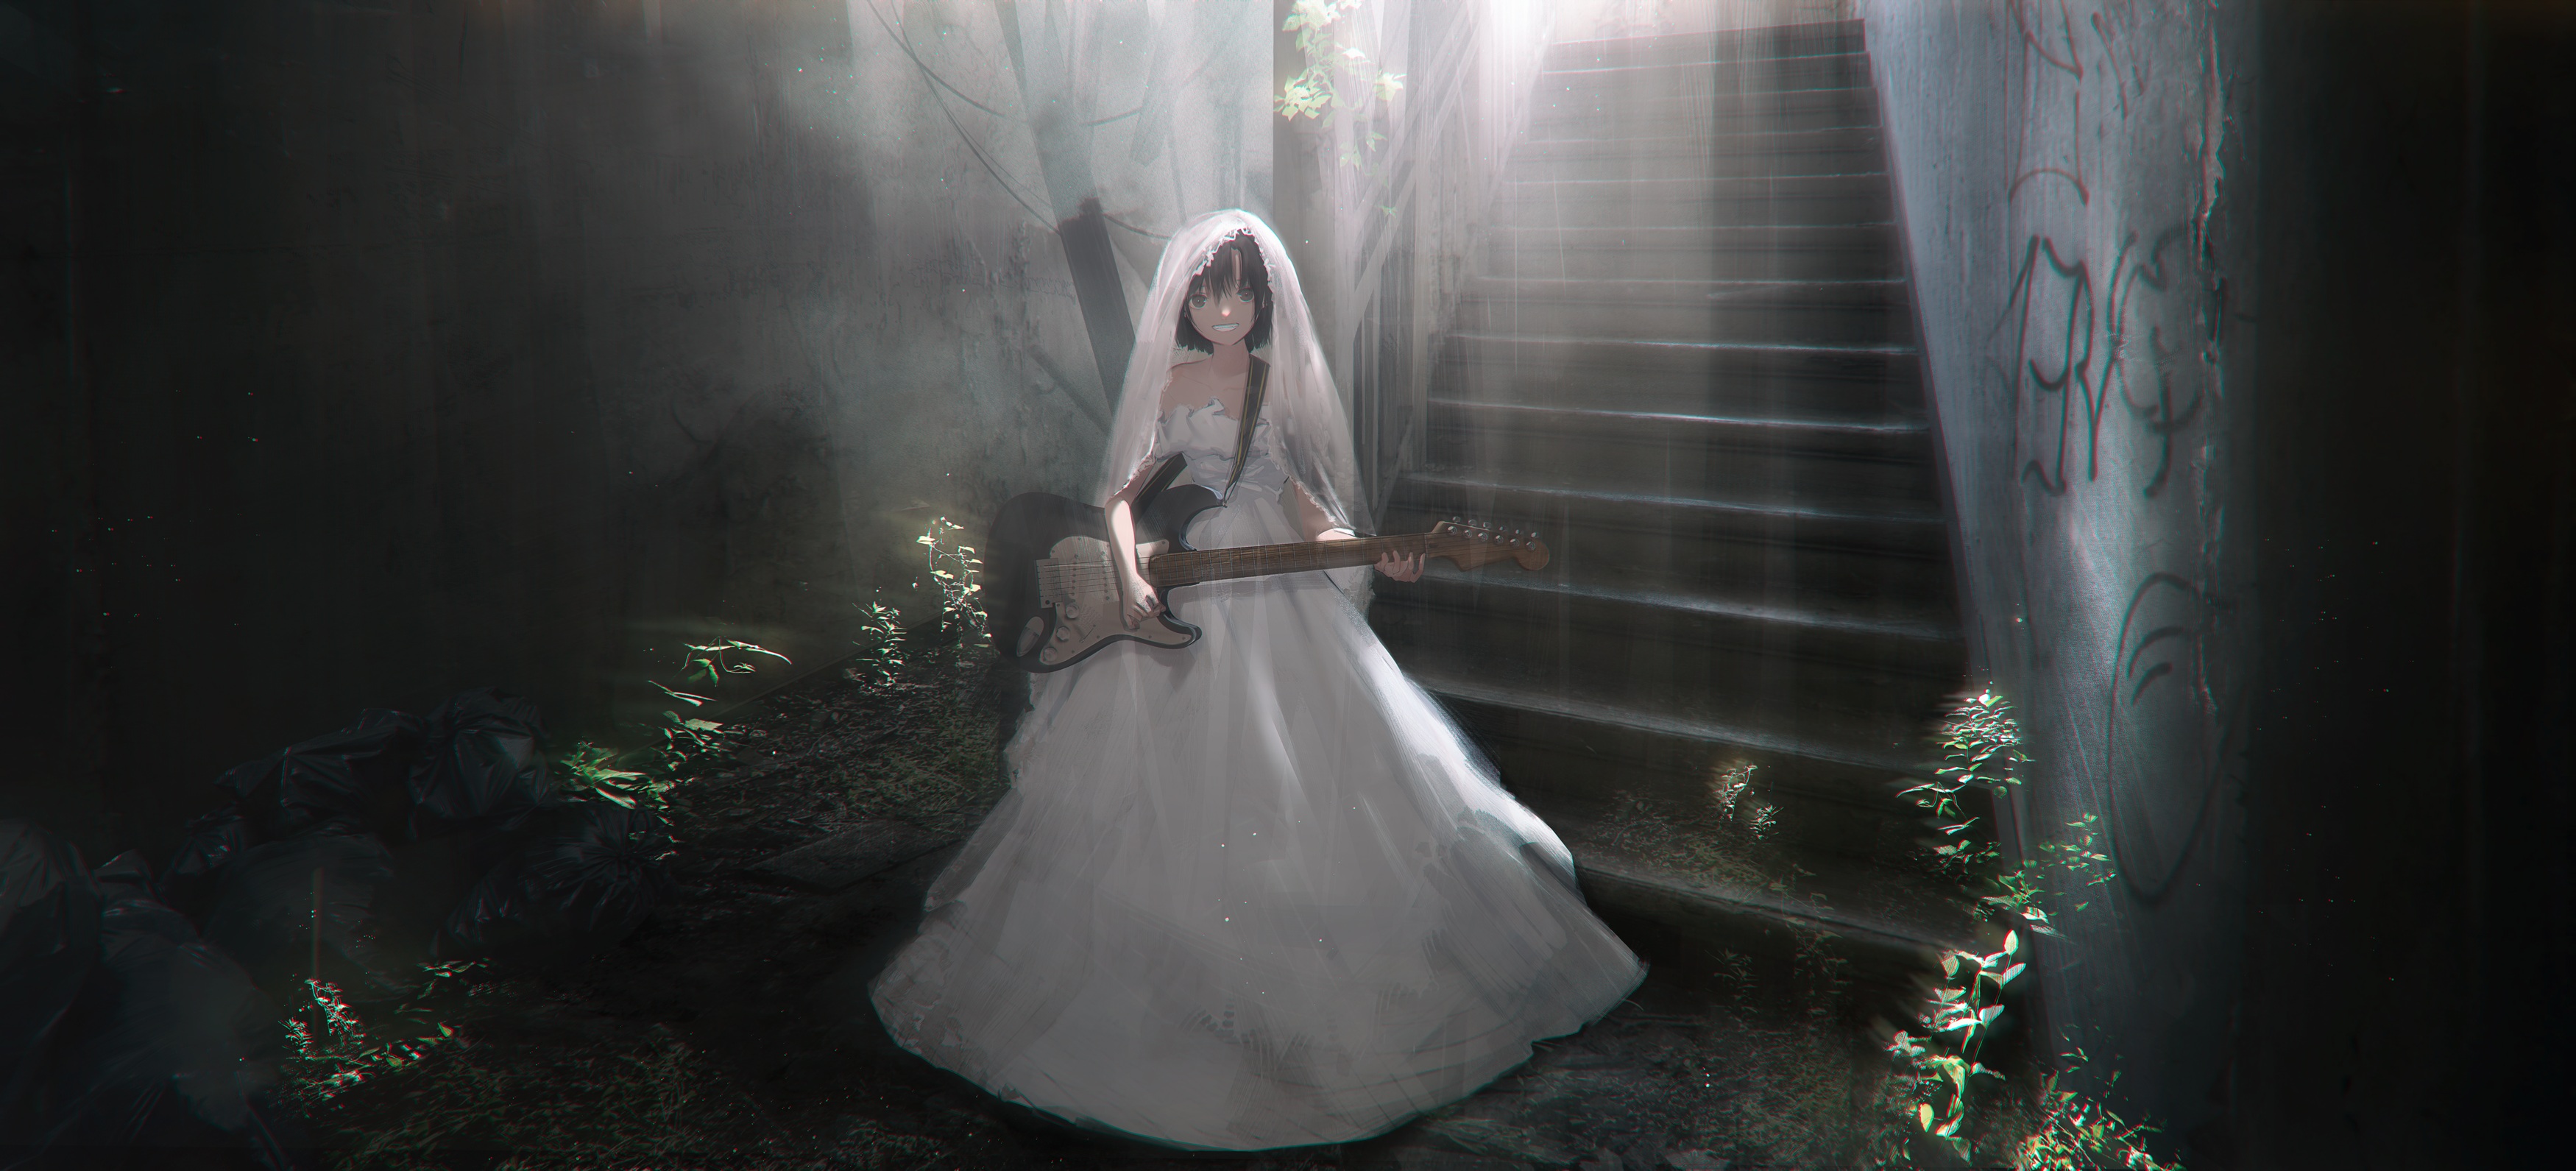 Anime Anime Girls Shiomi Artwork Wedding Dress Bridal Veil Guitar Stairs 3500x1591